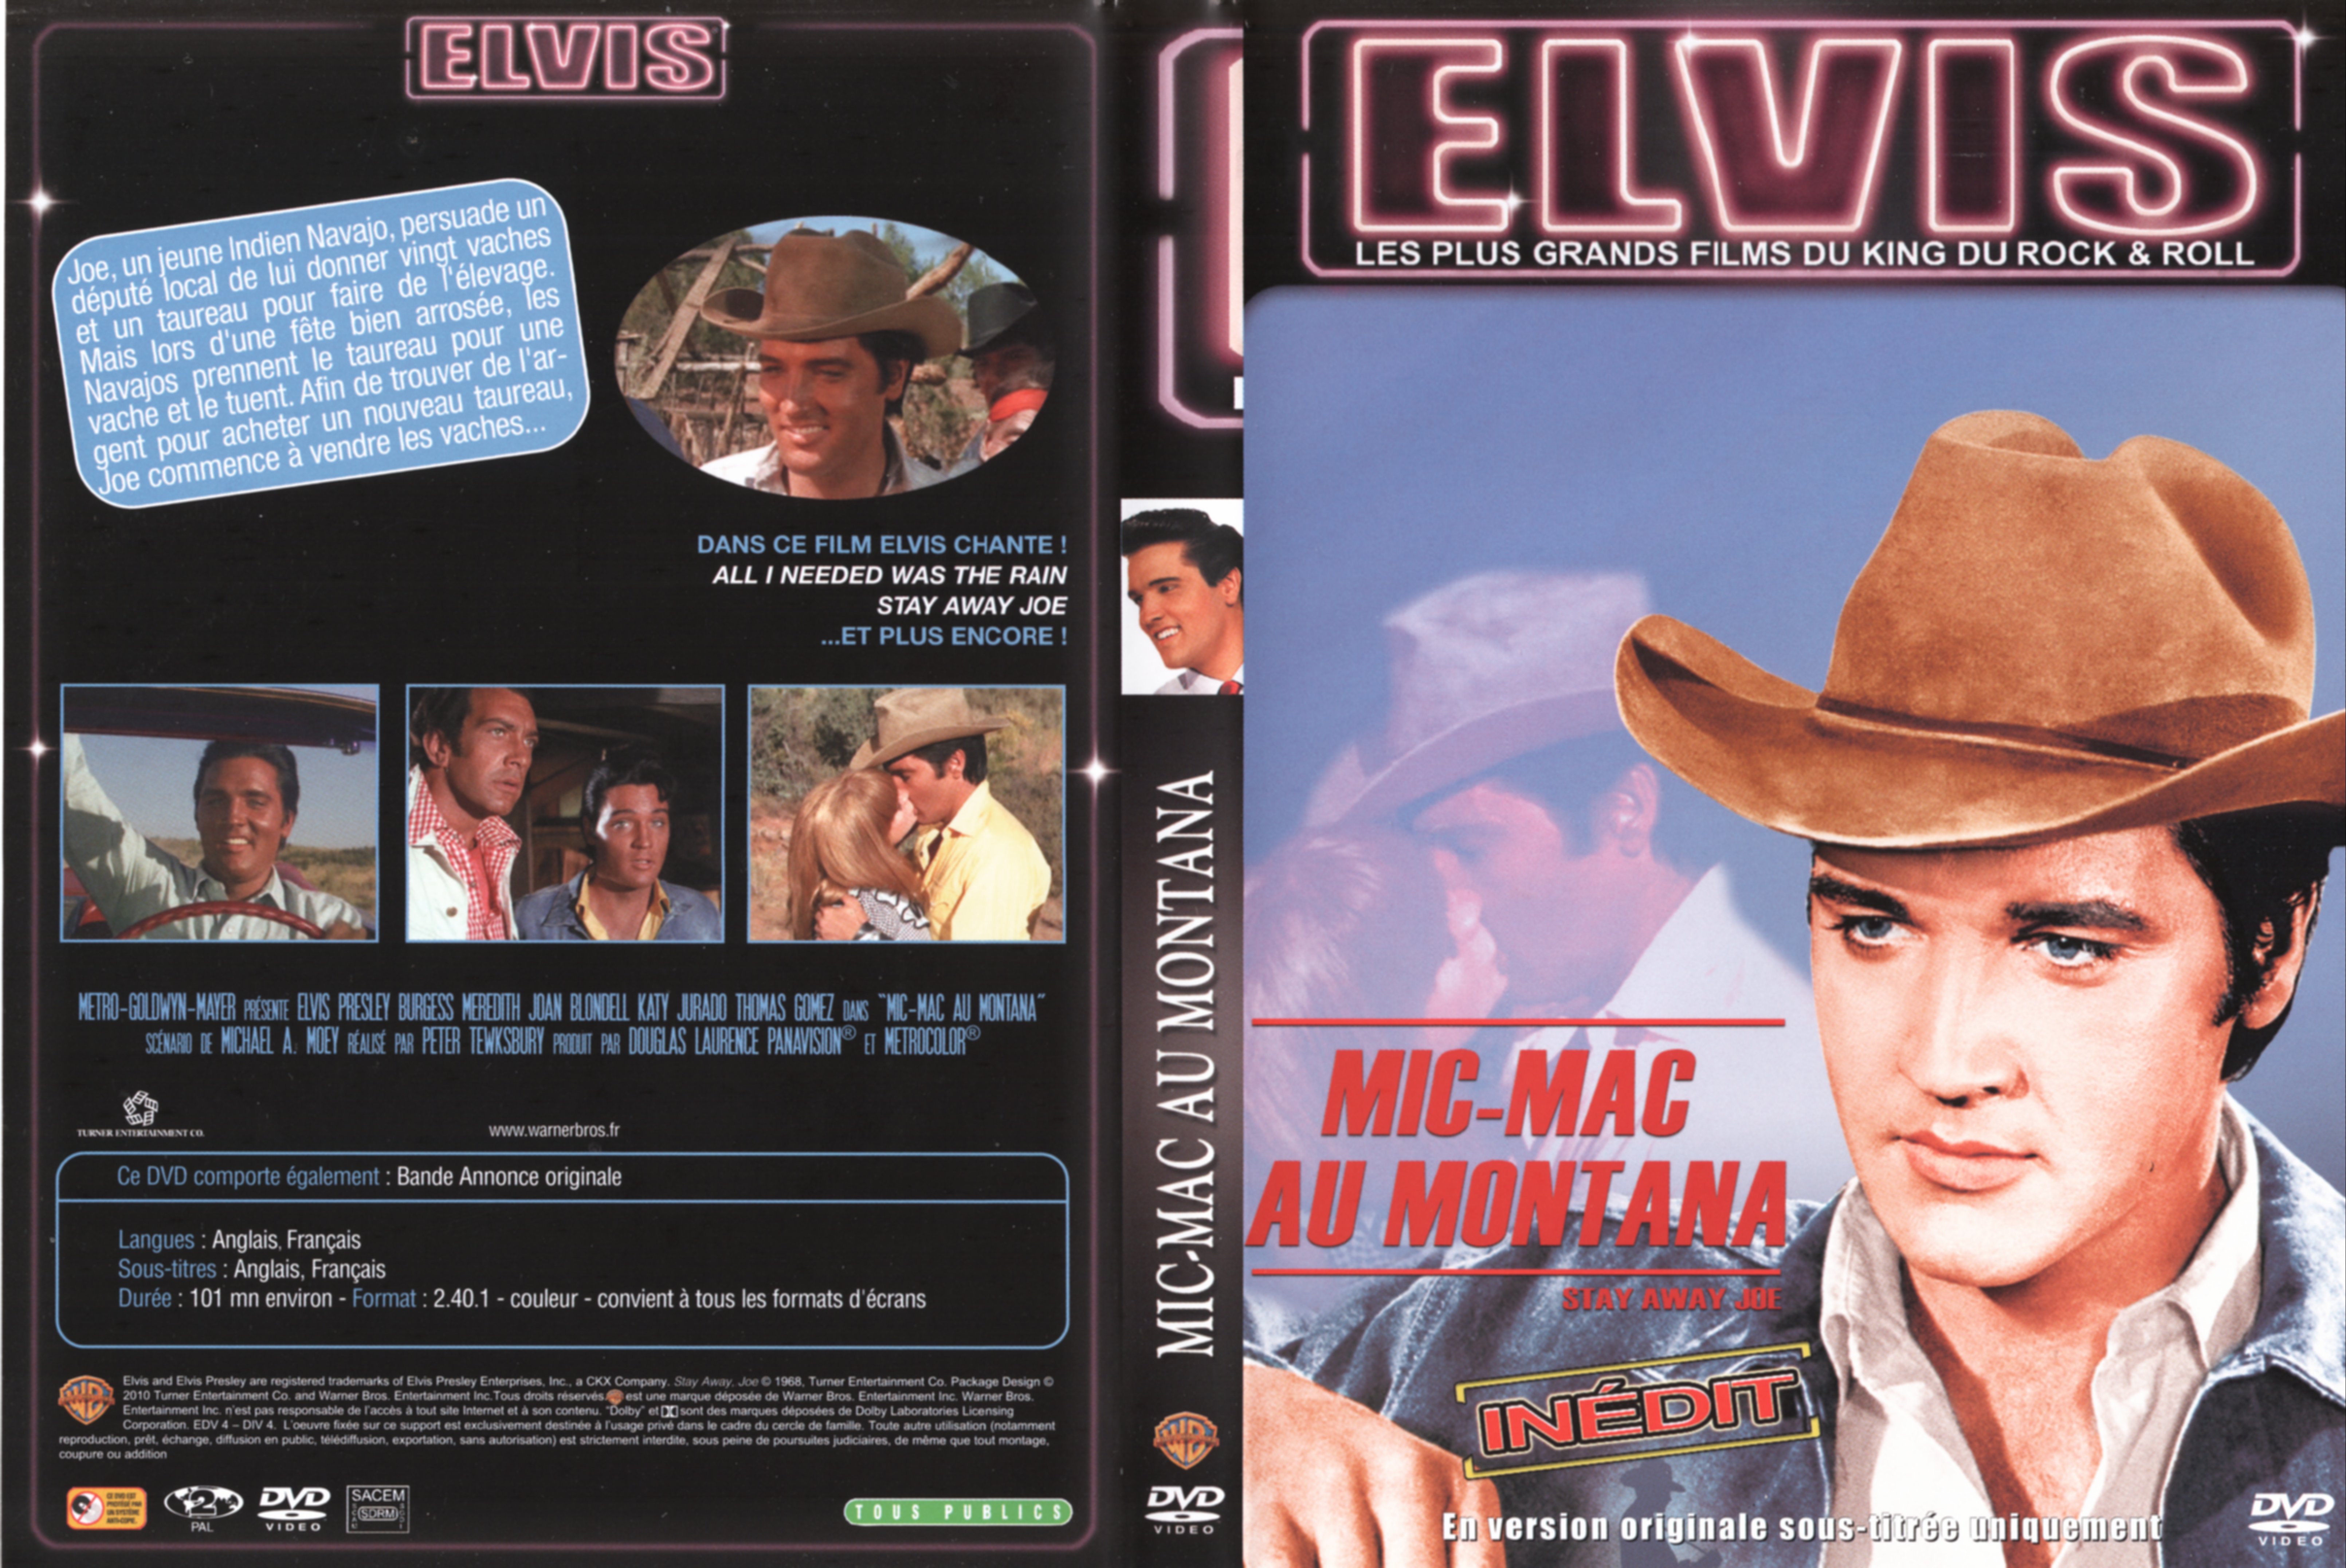 Jaquette DVD Mic-mac au montana